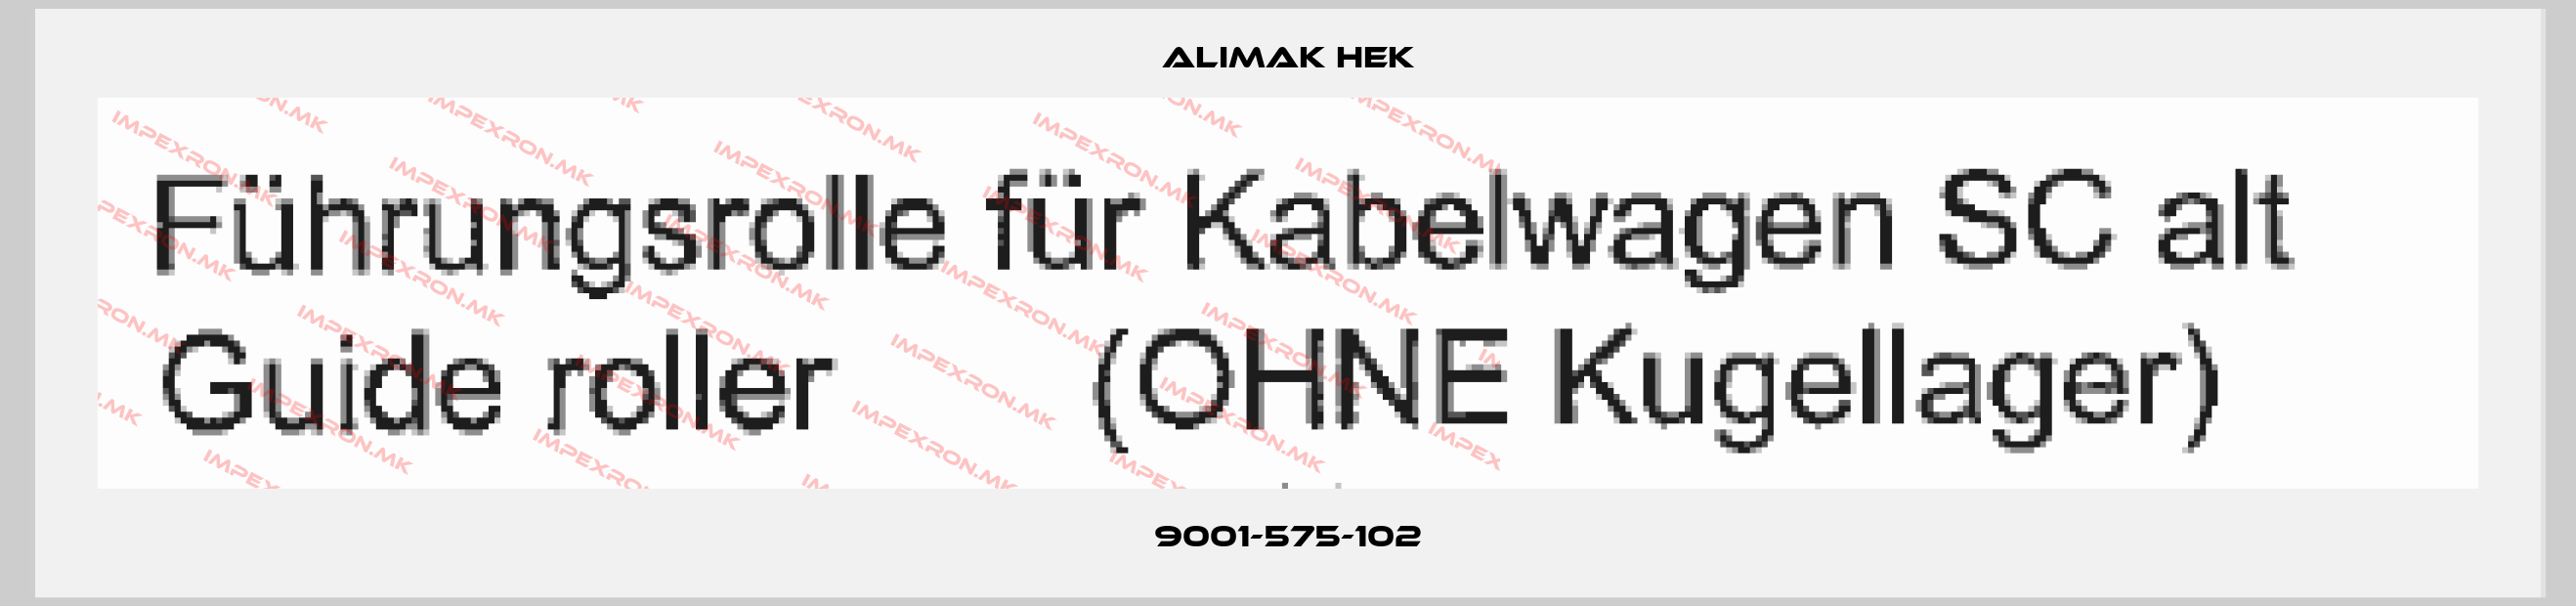 Alimak Hek-9001-575-102price